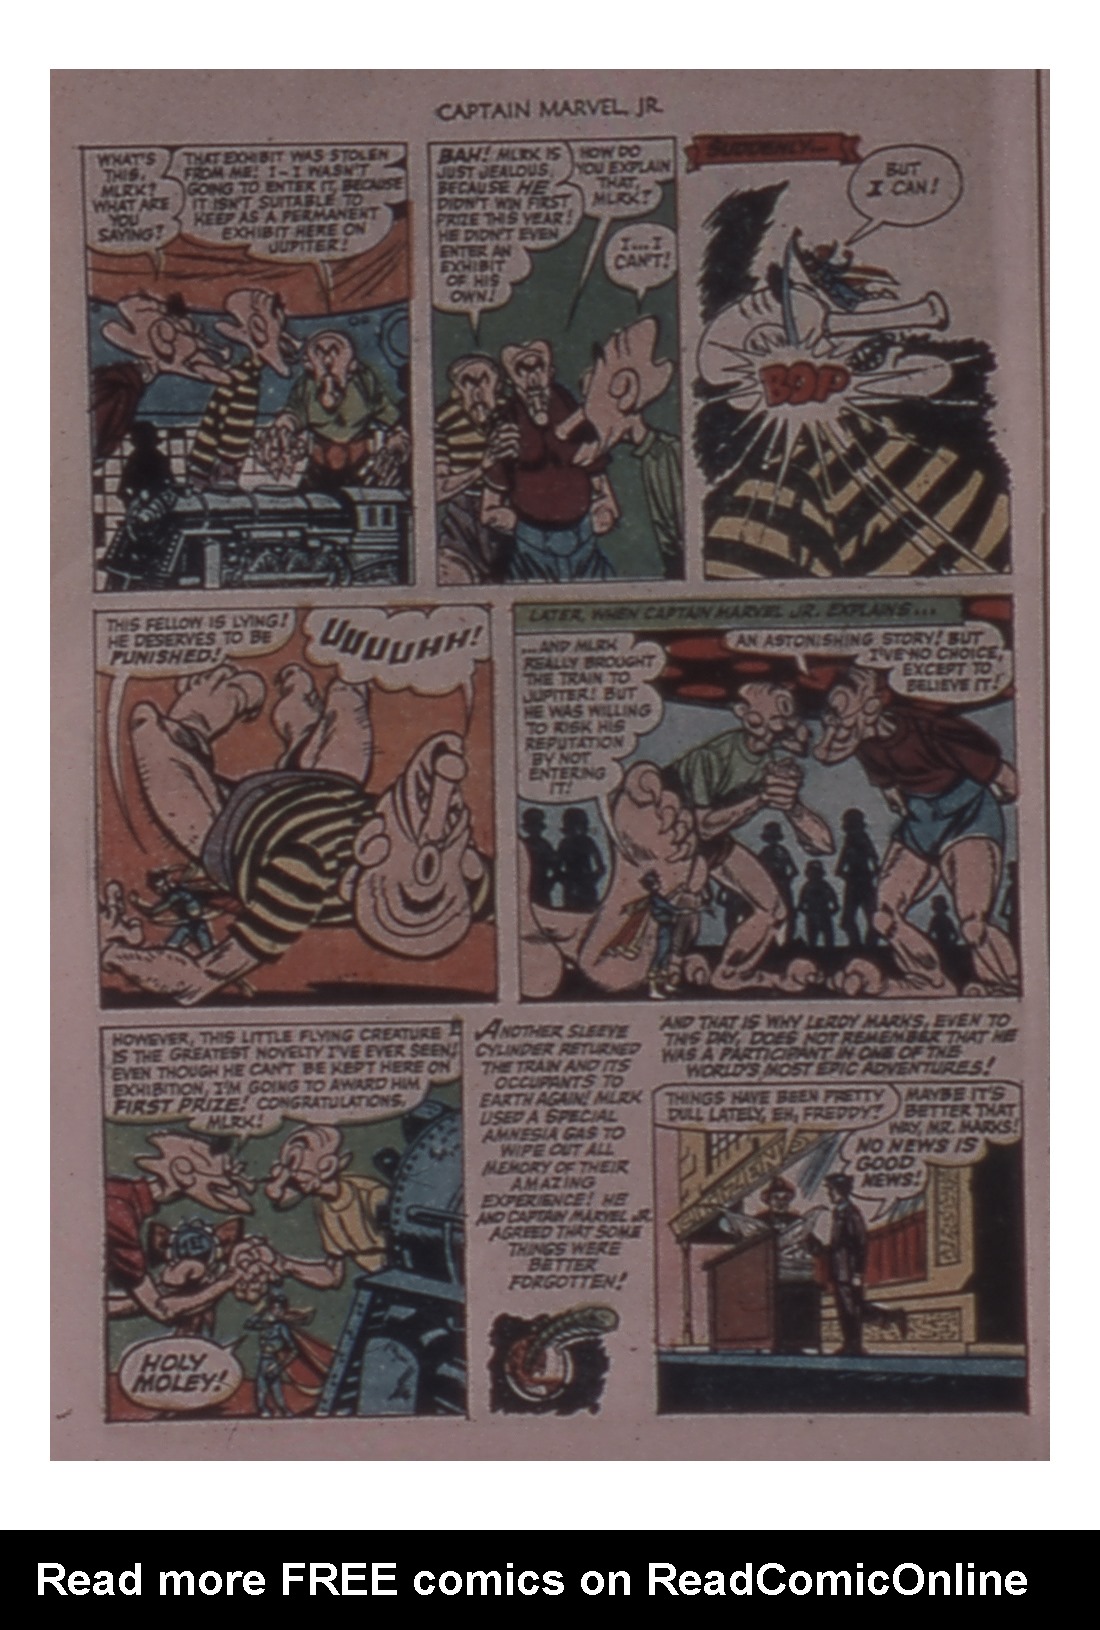 Read online Captain Marvel, Jr. comic -  Issue #114 - 10